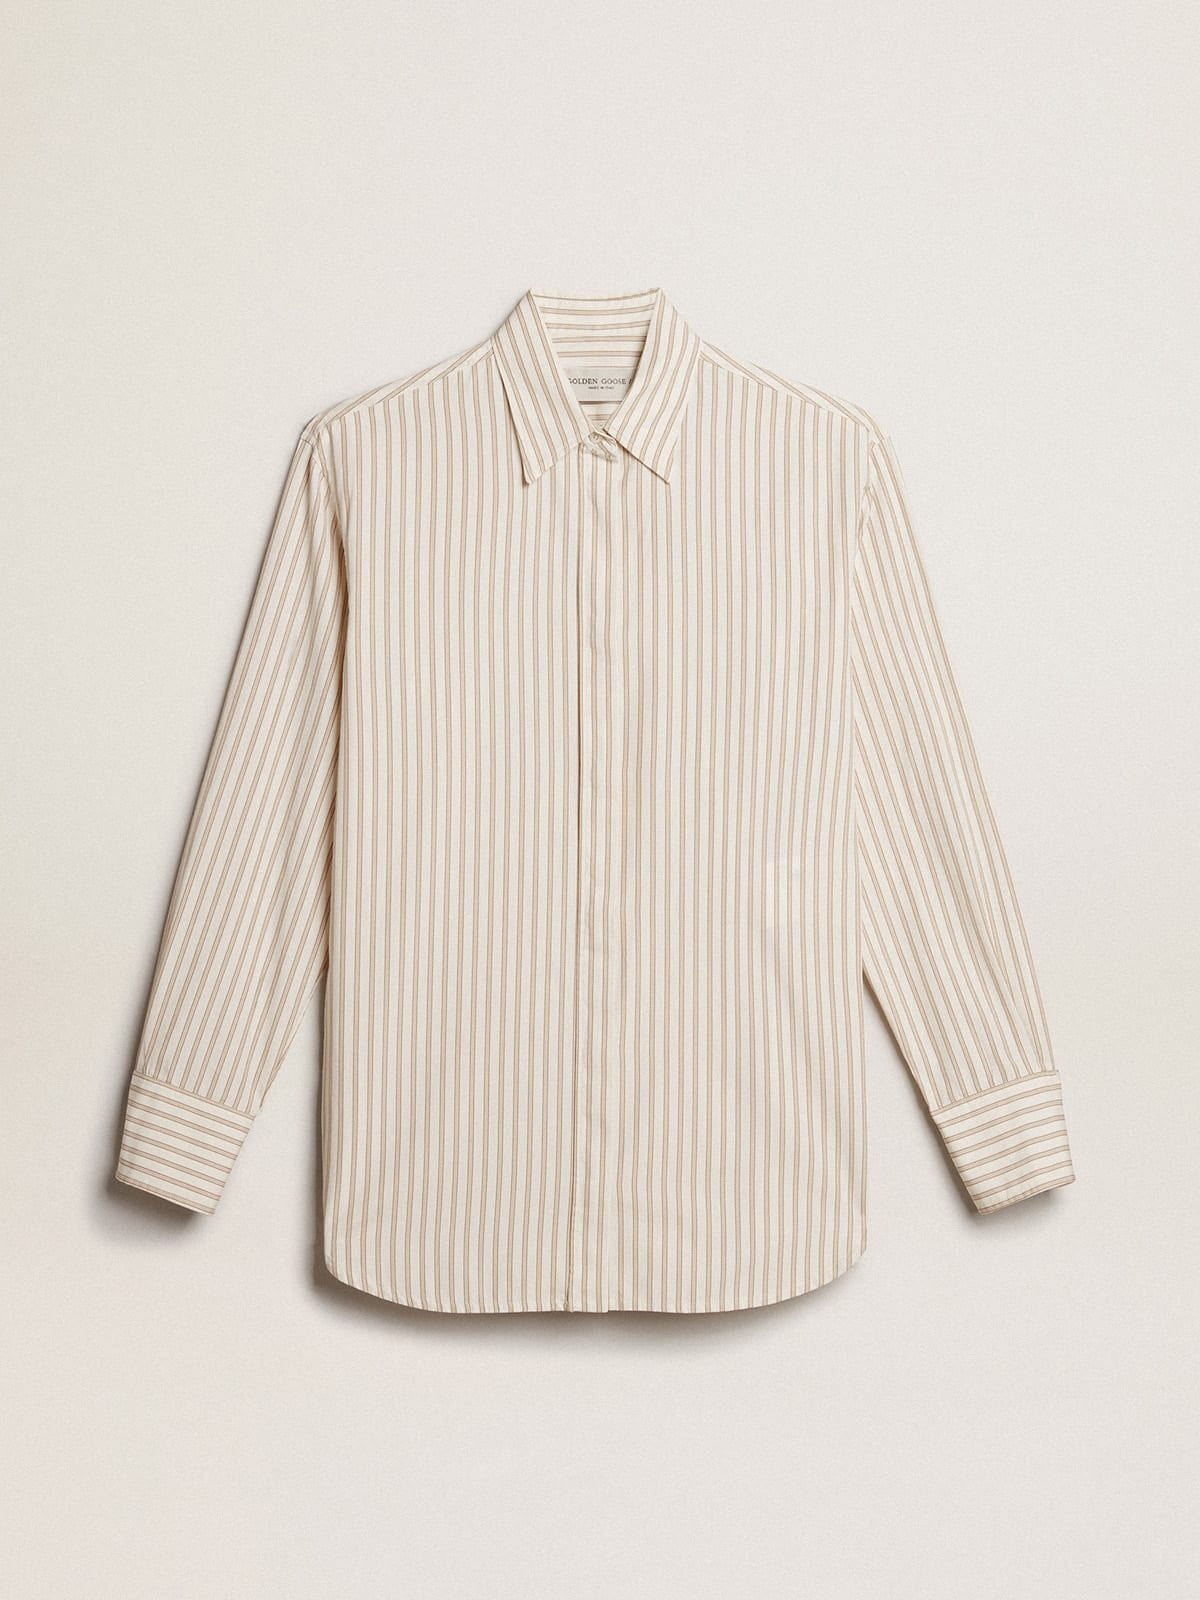 Women’s white cotton shirt with beige stripes - 1